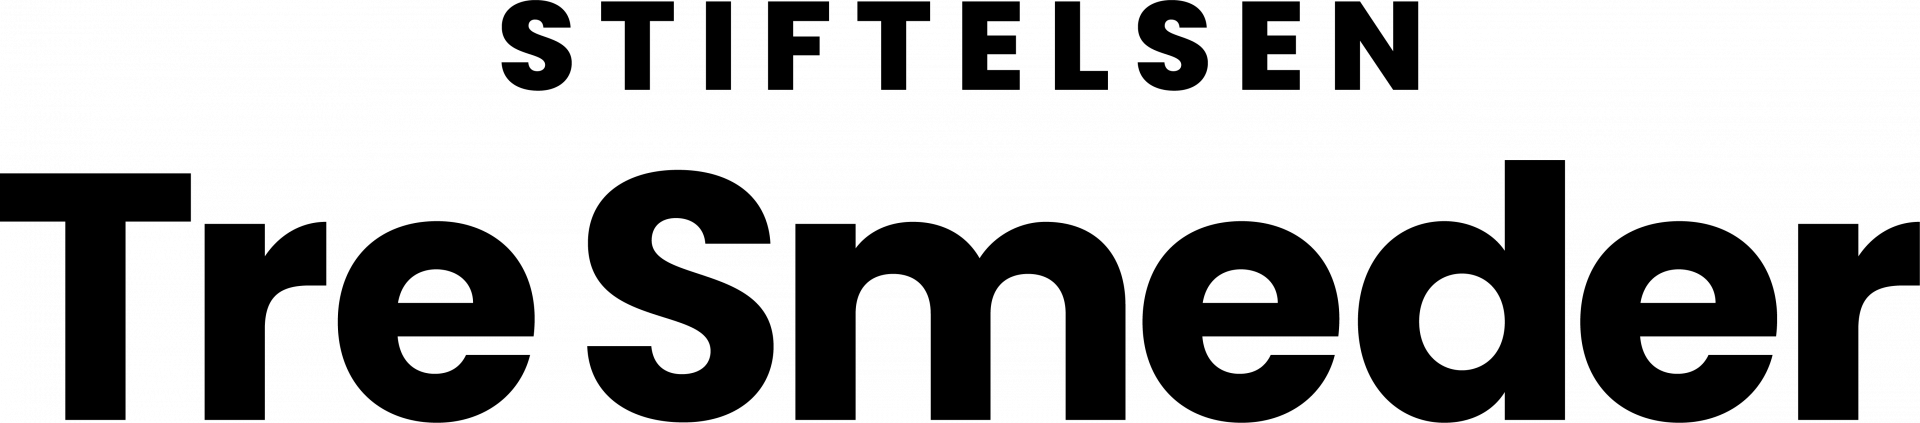 Stiftelsen Tre Smeders logotyp.